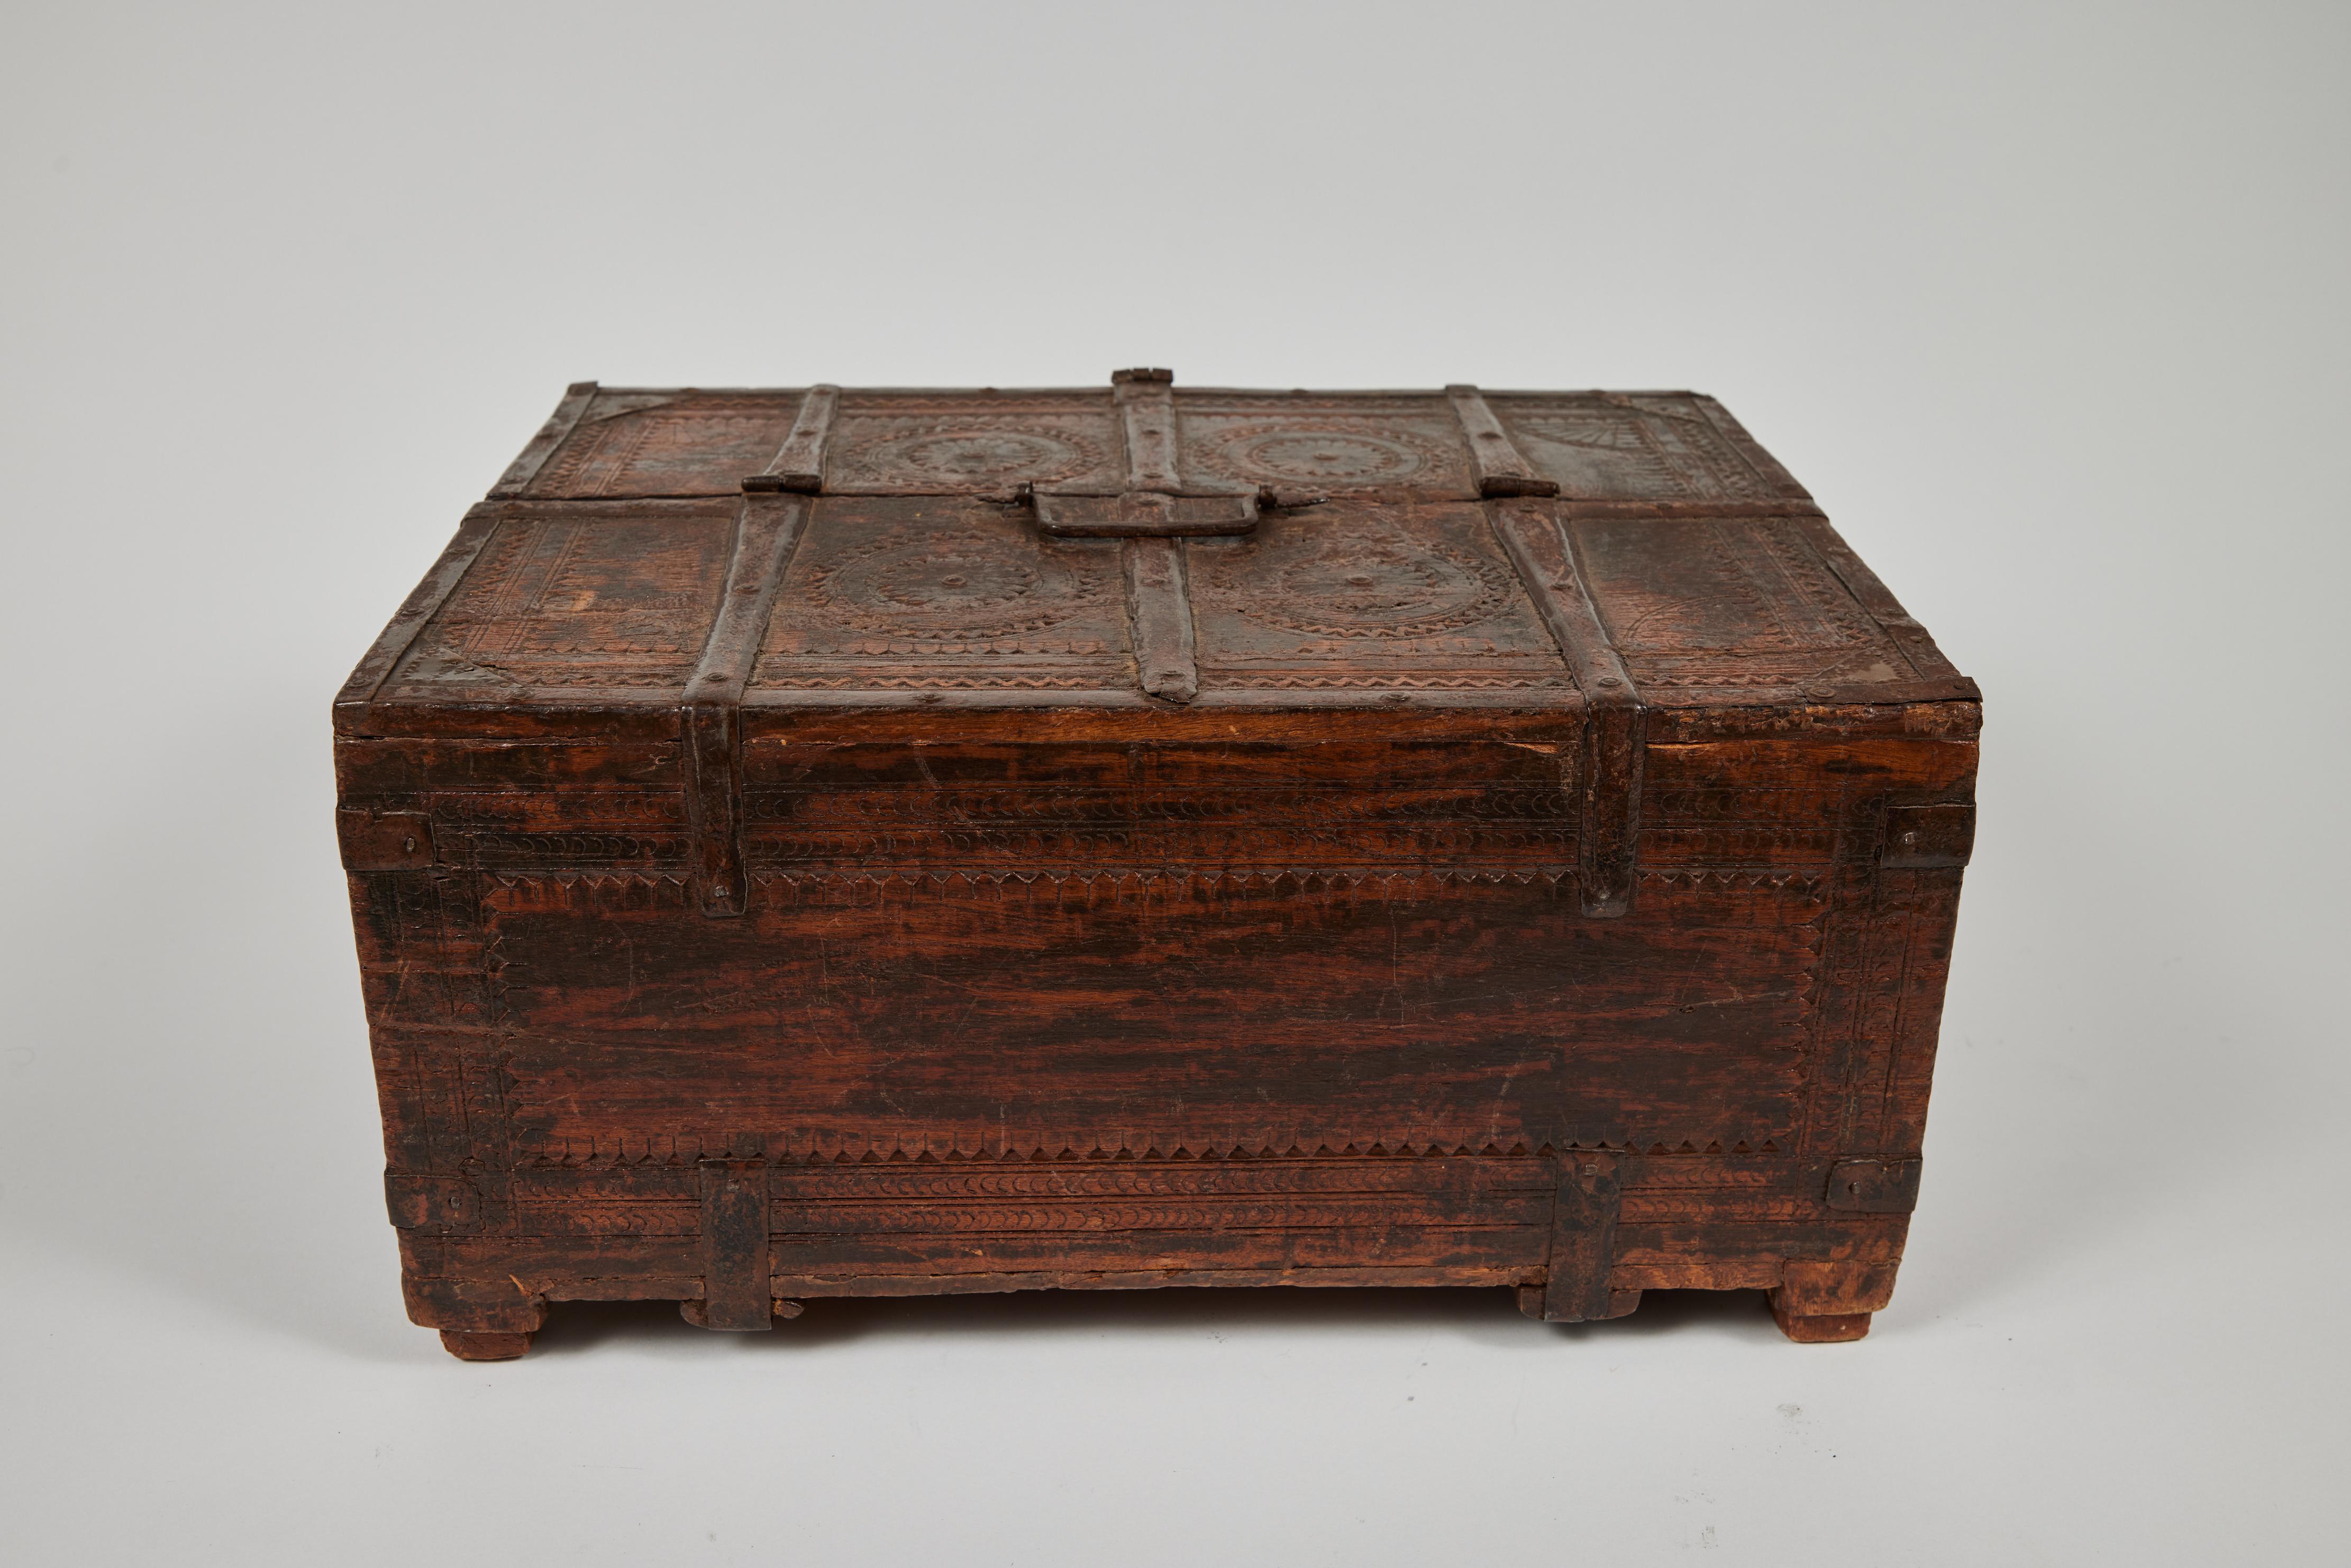 Metal Antique Large Footed Wood Keepsake Box